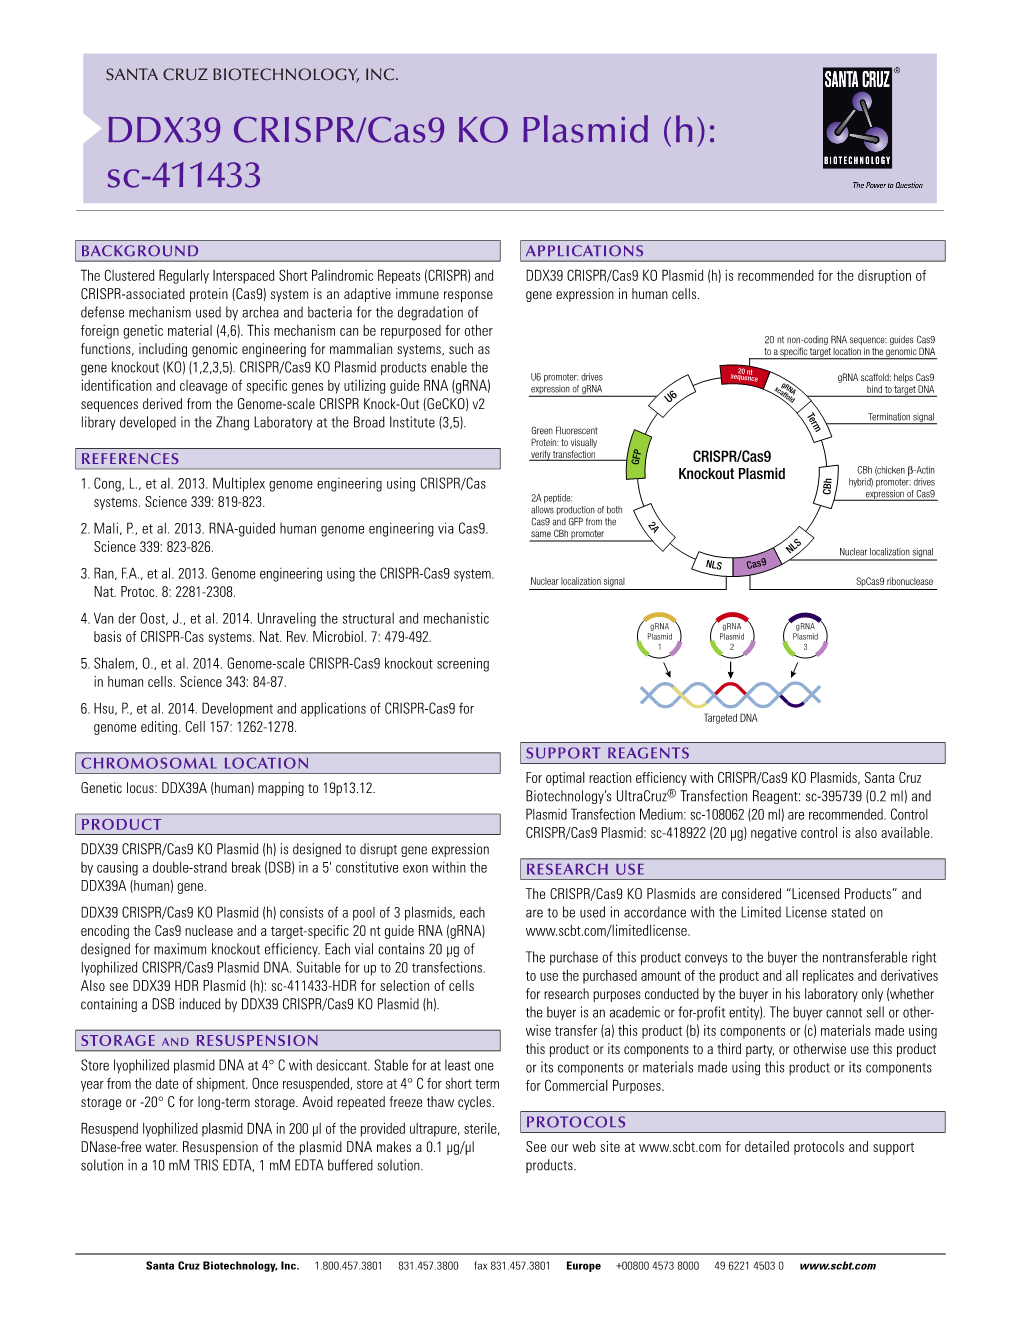 DDX39 CRISPR/Cas9 KO Plasmid (H): Sc-411433